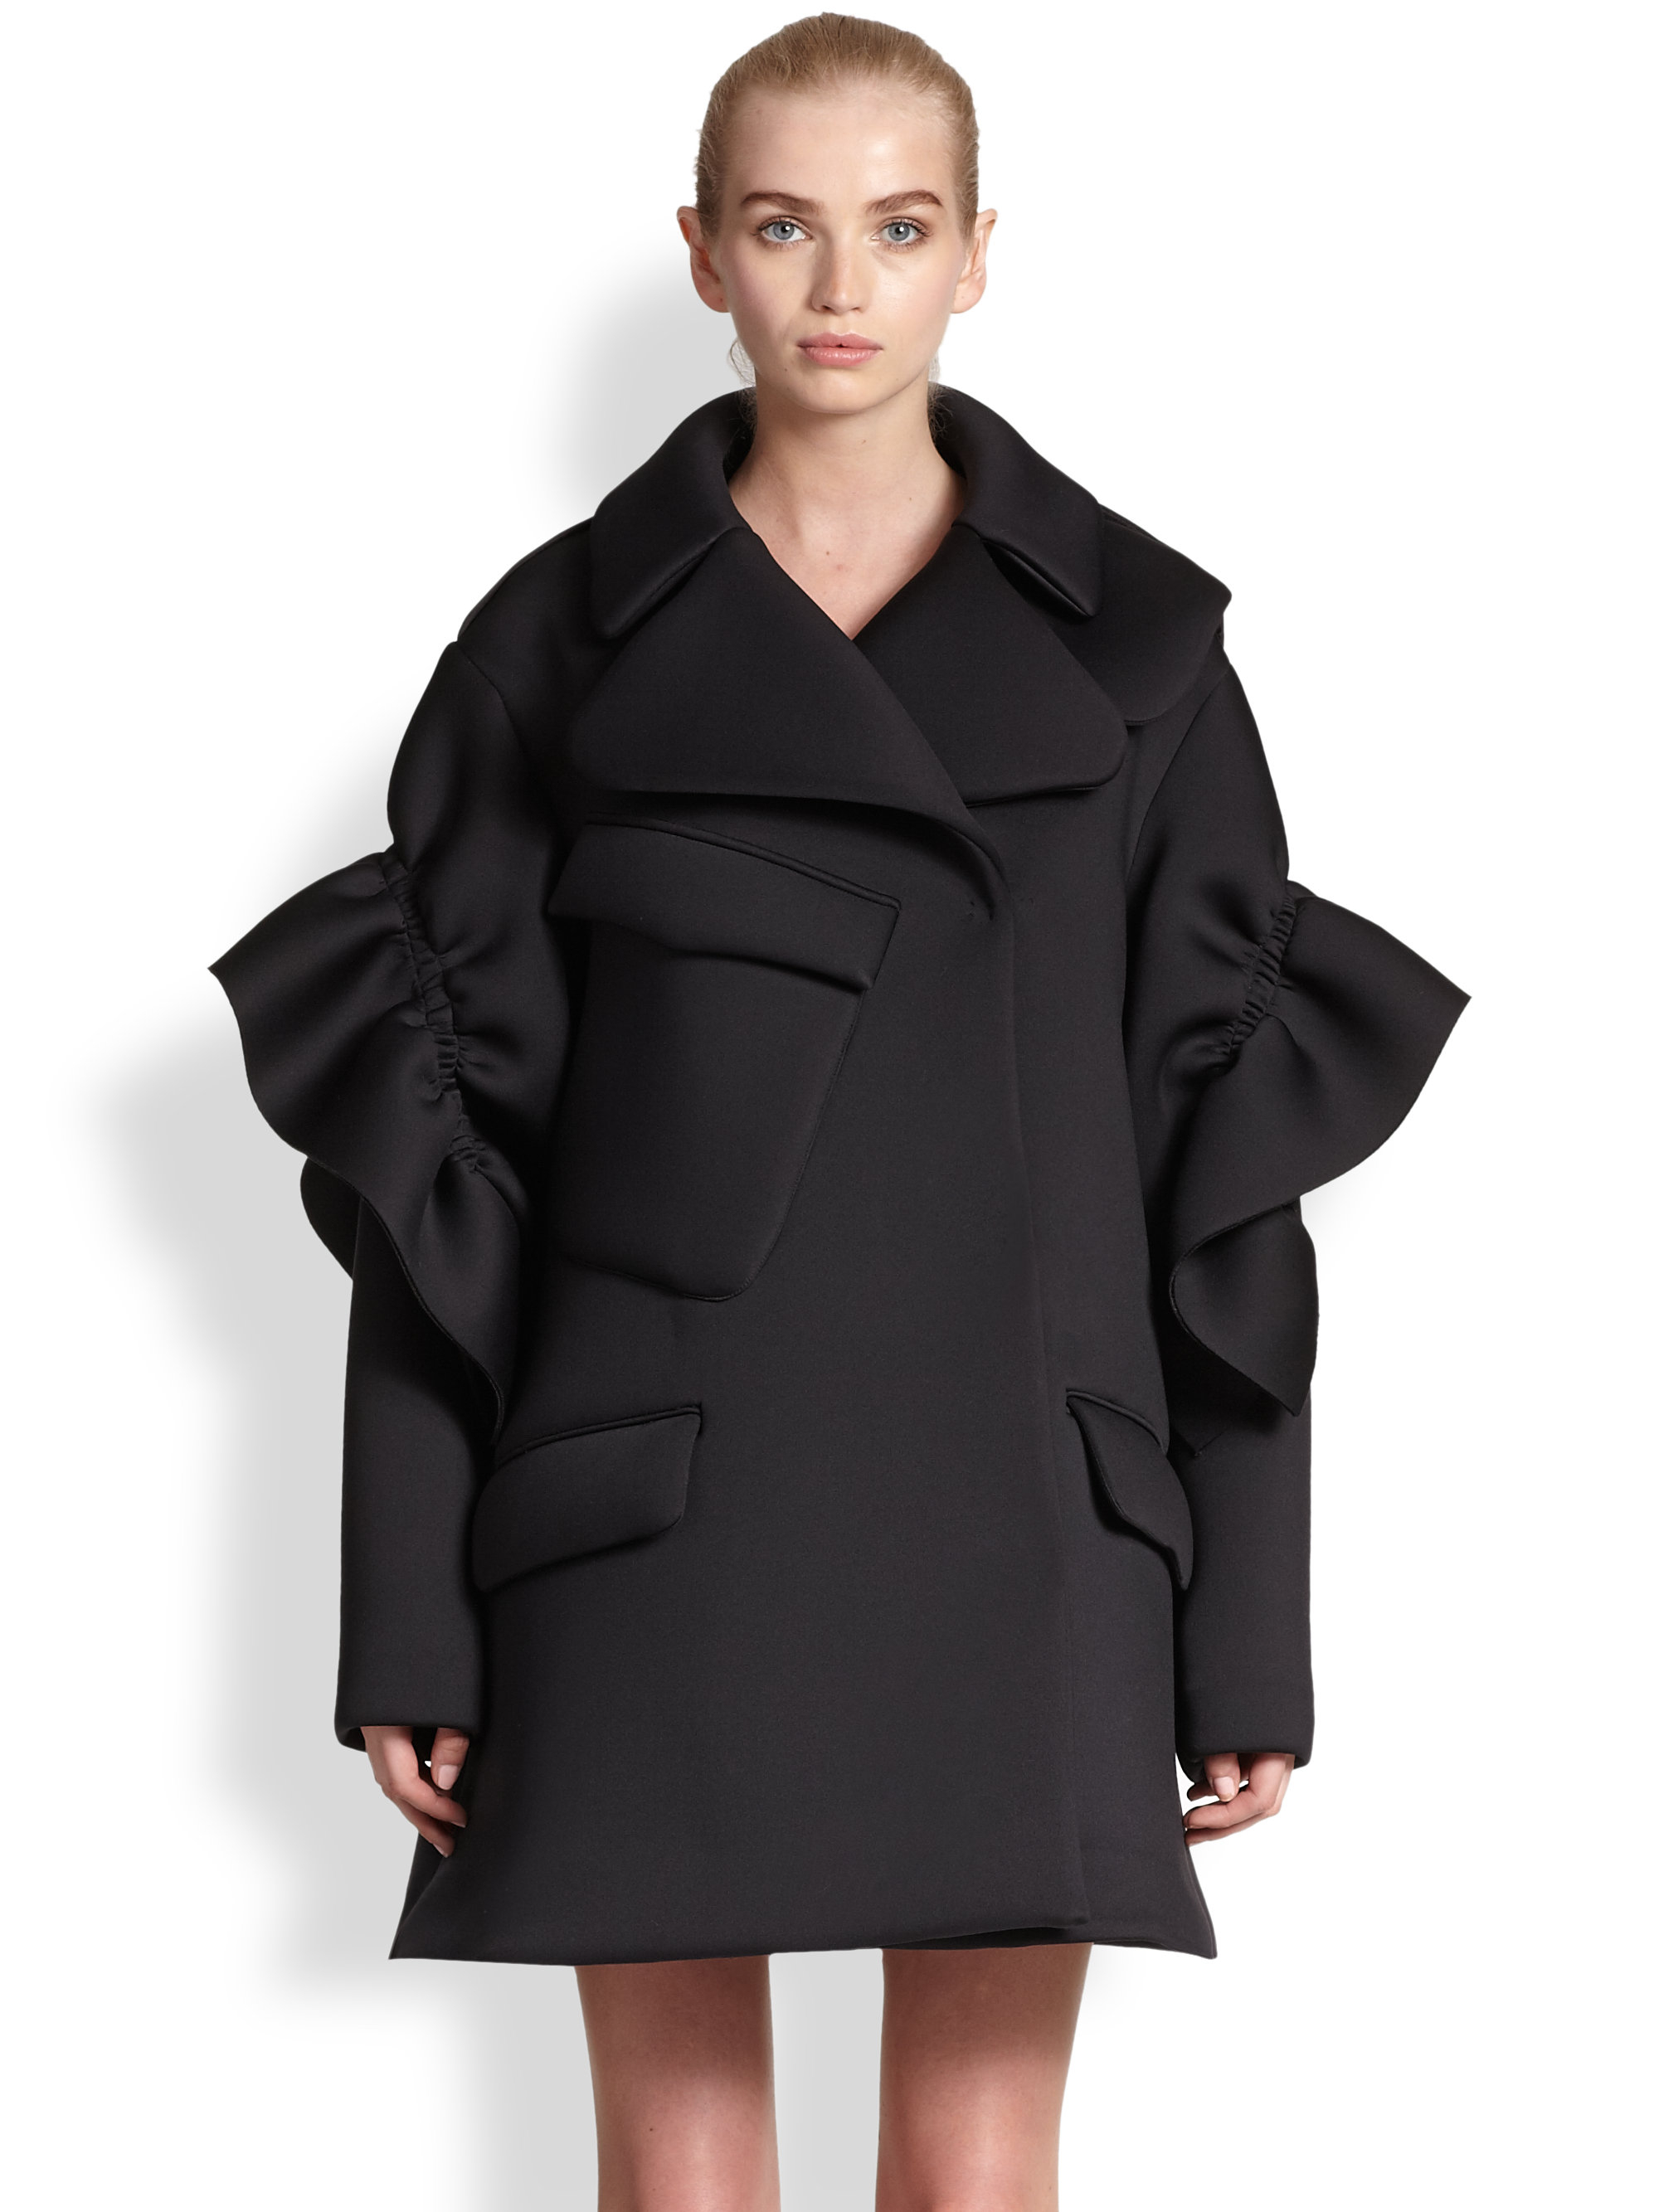 Simone rocha Ruched-Shoulder Scuba Coat in Black | Lyst